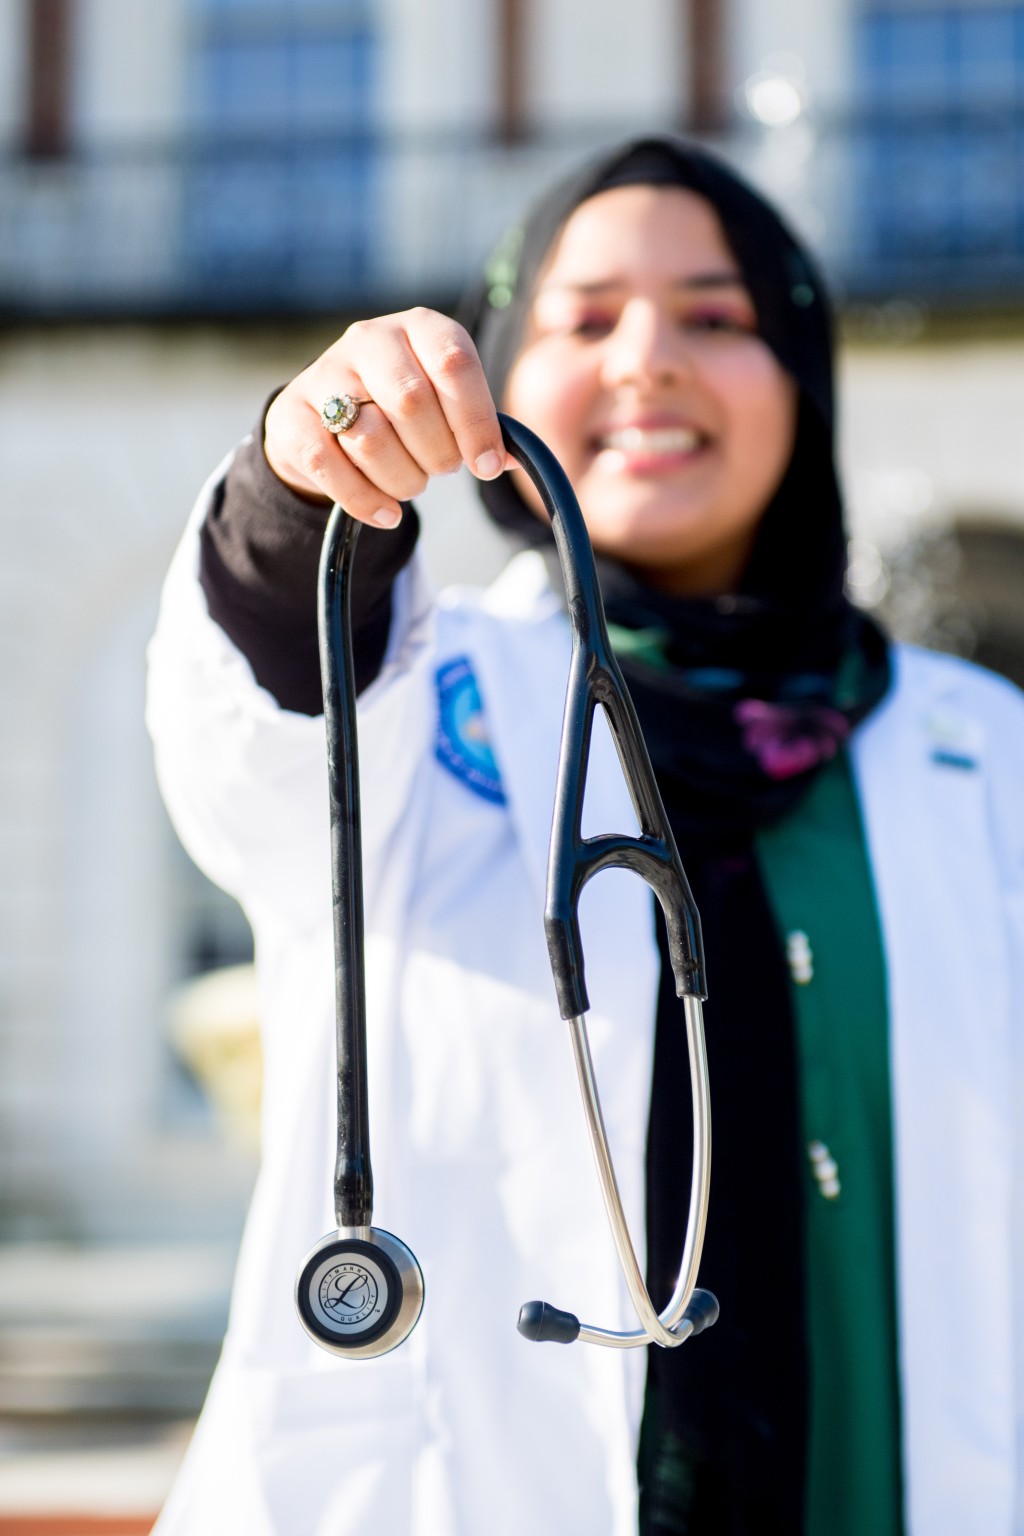 Fajar holds up her stethoscope